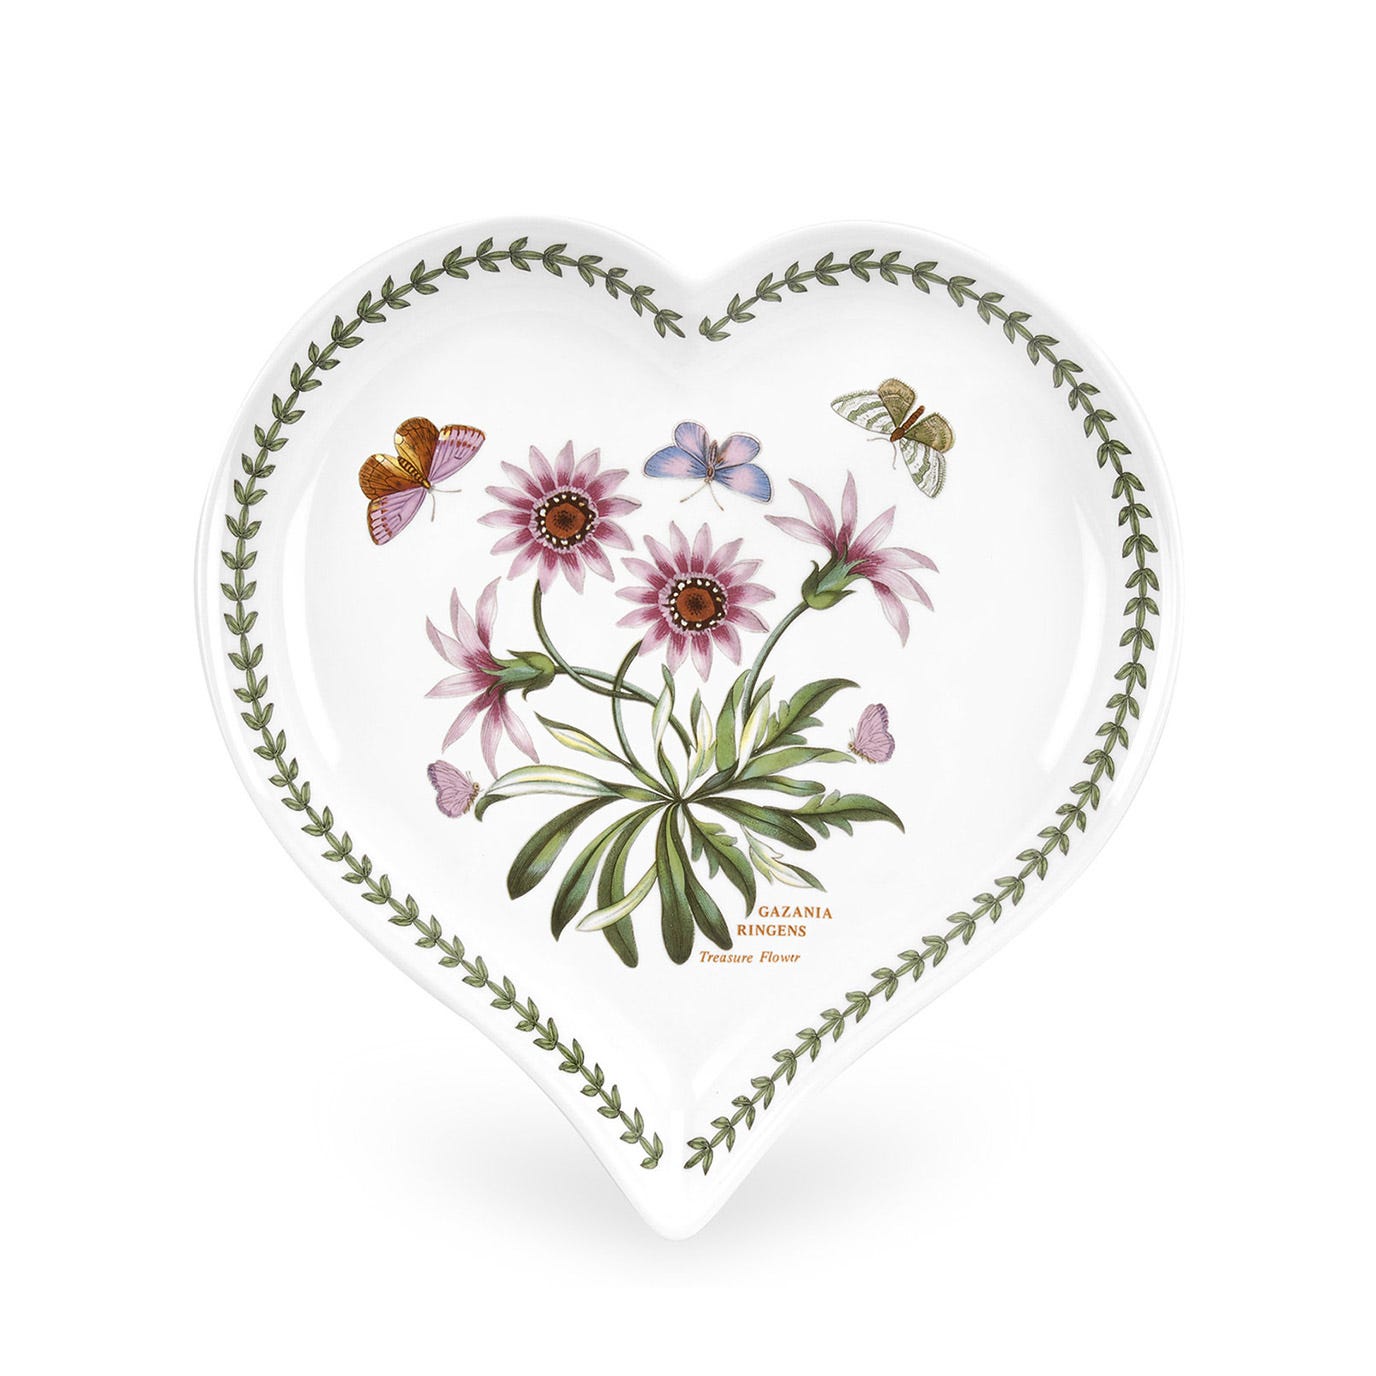 Botanic Garden Treasure Flower Heart Dish